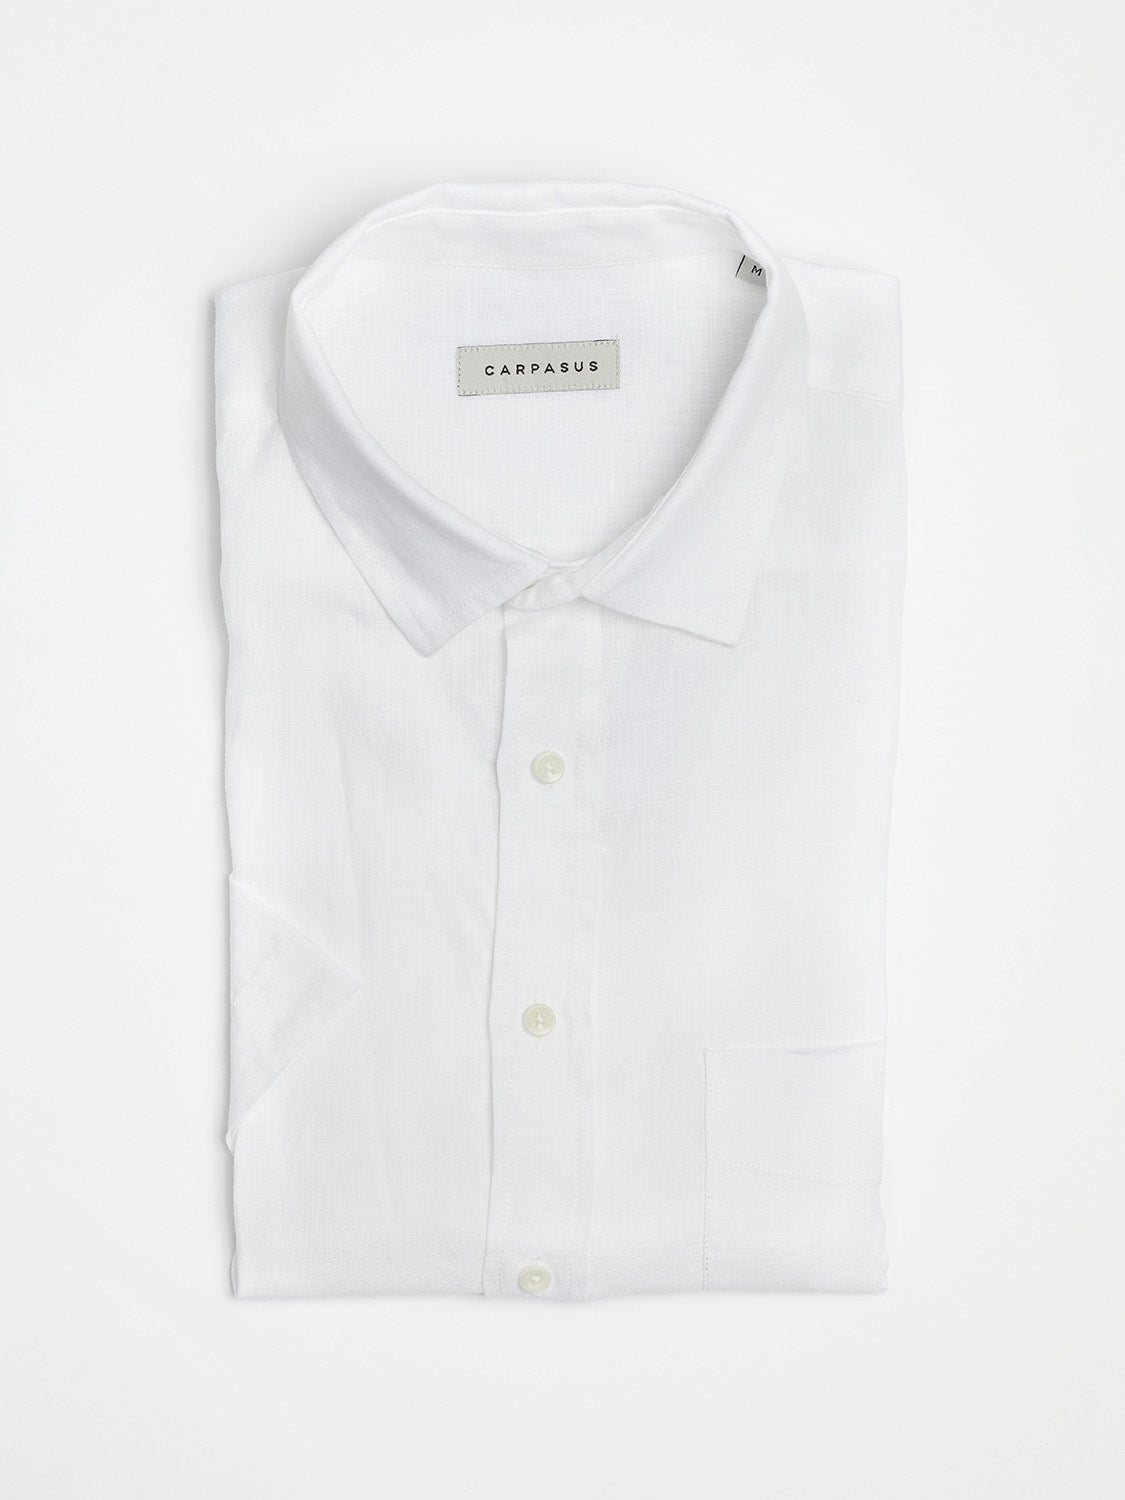 Sustainable Short Sleeve Linen Shirt Lido White - CARPASUS Online Store